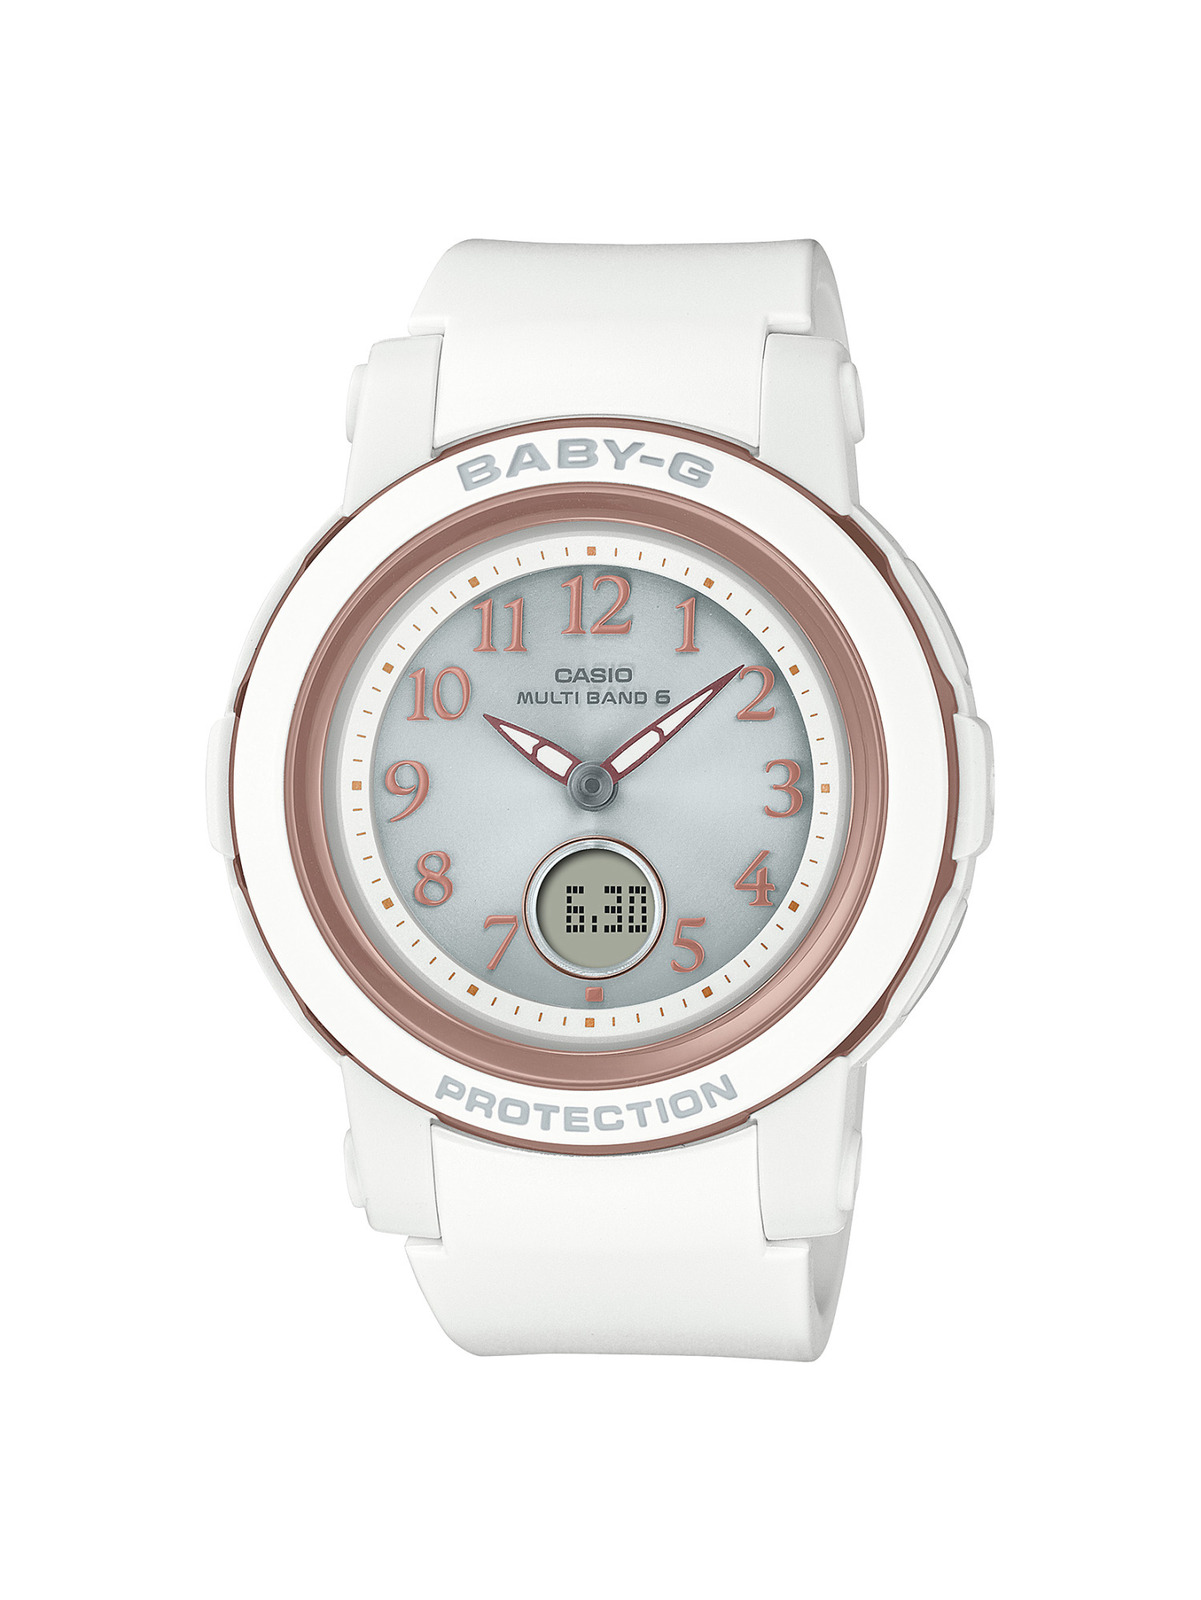 BABY-G新作腕時計“ホワイト×ピンクゴールド”の春色で、スクエアと 